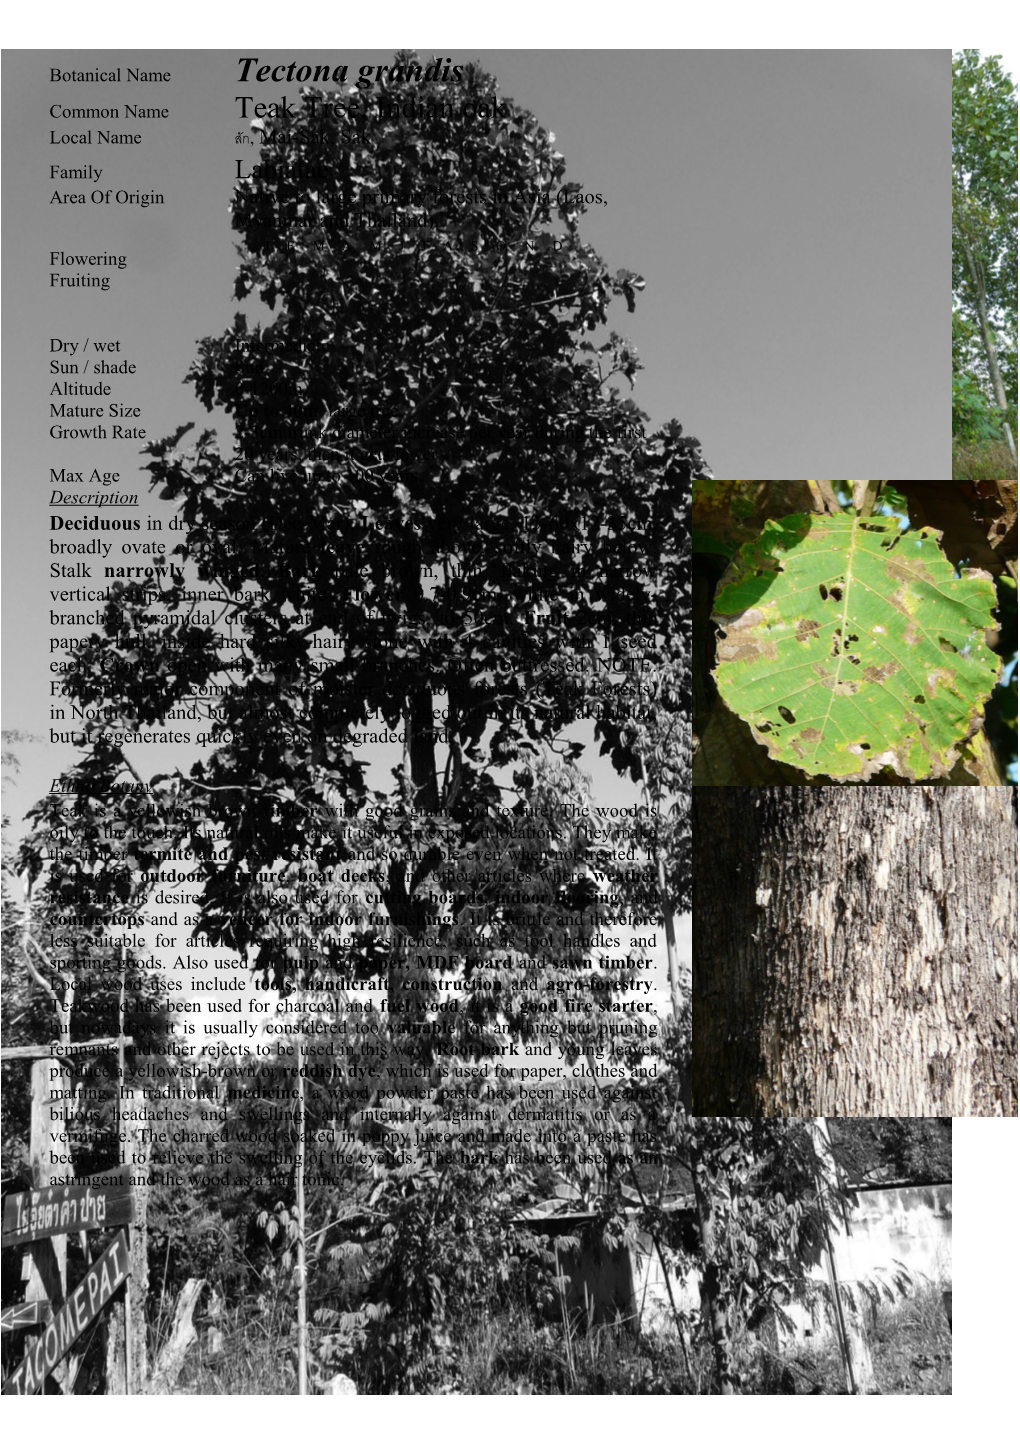 Common Name Teak Tree, Indian Oak